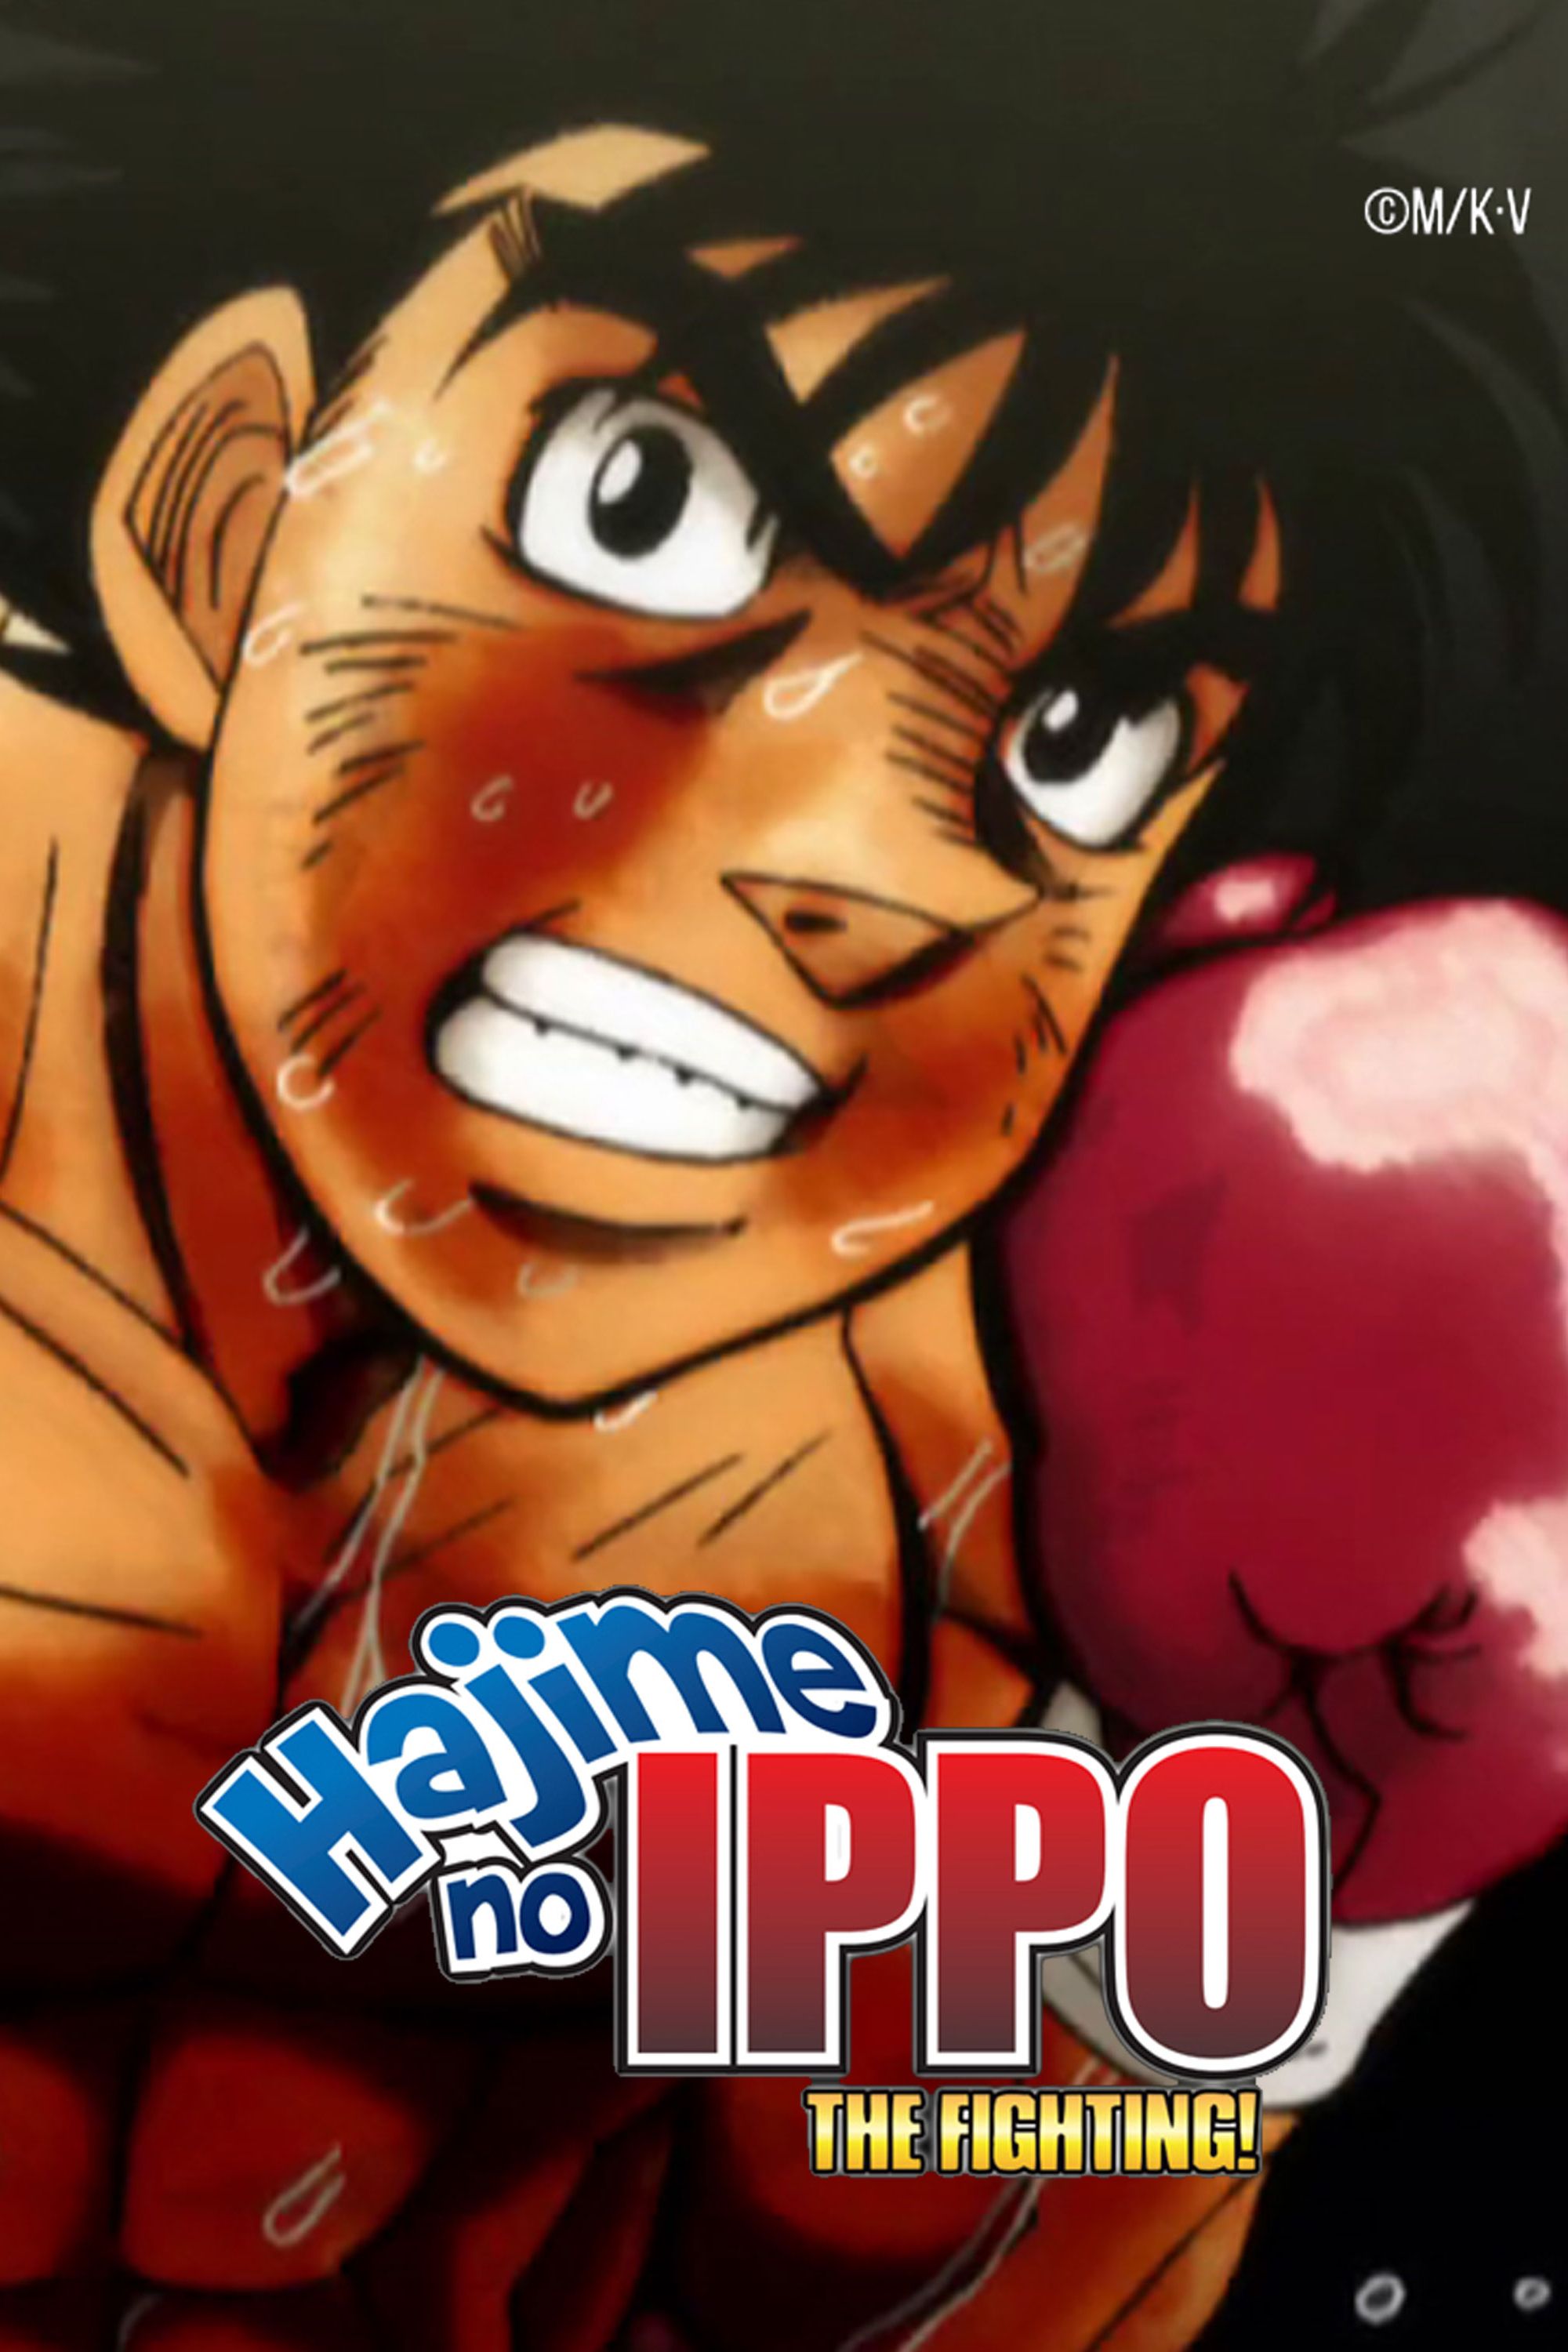 Hajime No Ippo: The Fighting! Tears of Joy - Assista na Crunchyroll